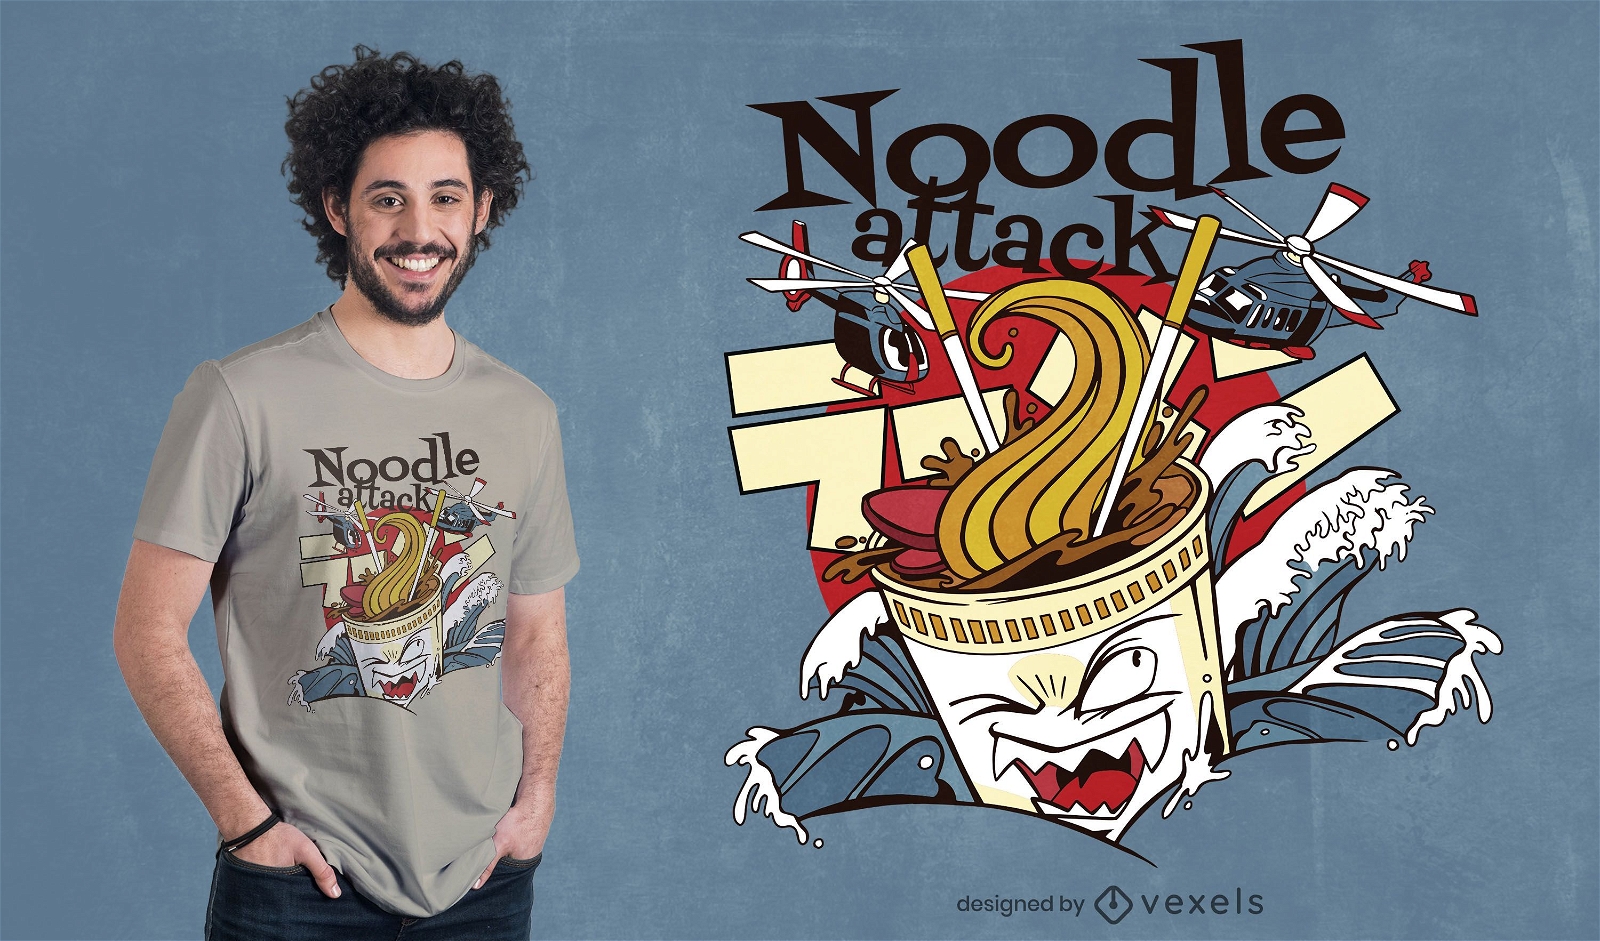 Noodle attack t-shirt design